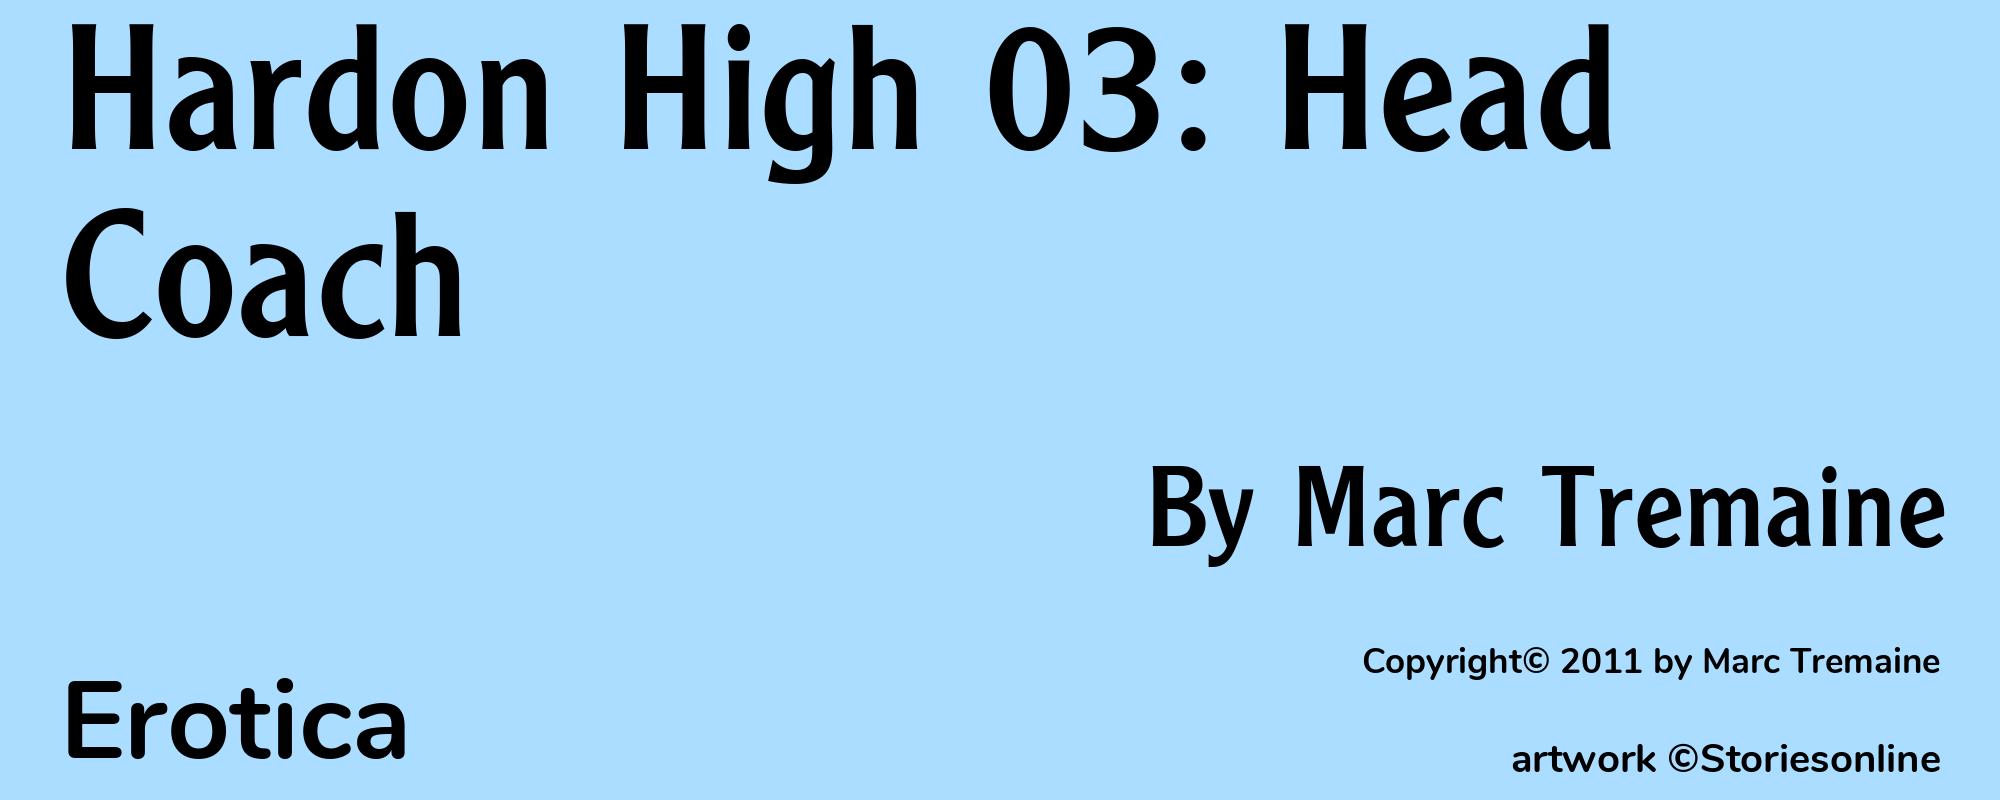 Hardon High 03: Head Coach - Cover